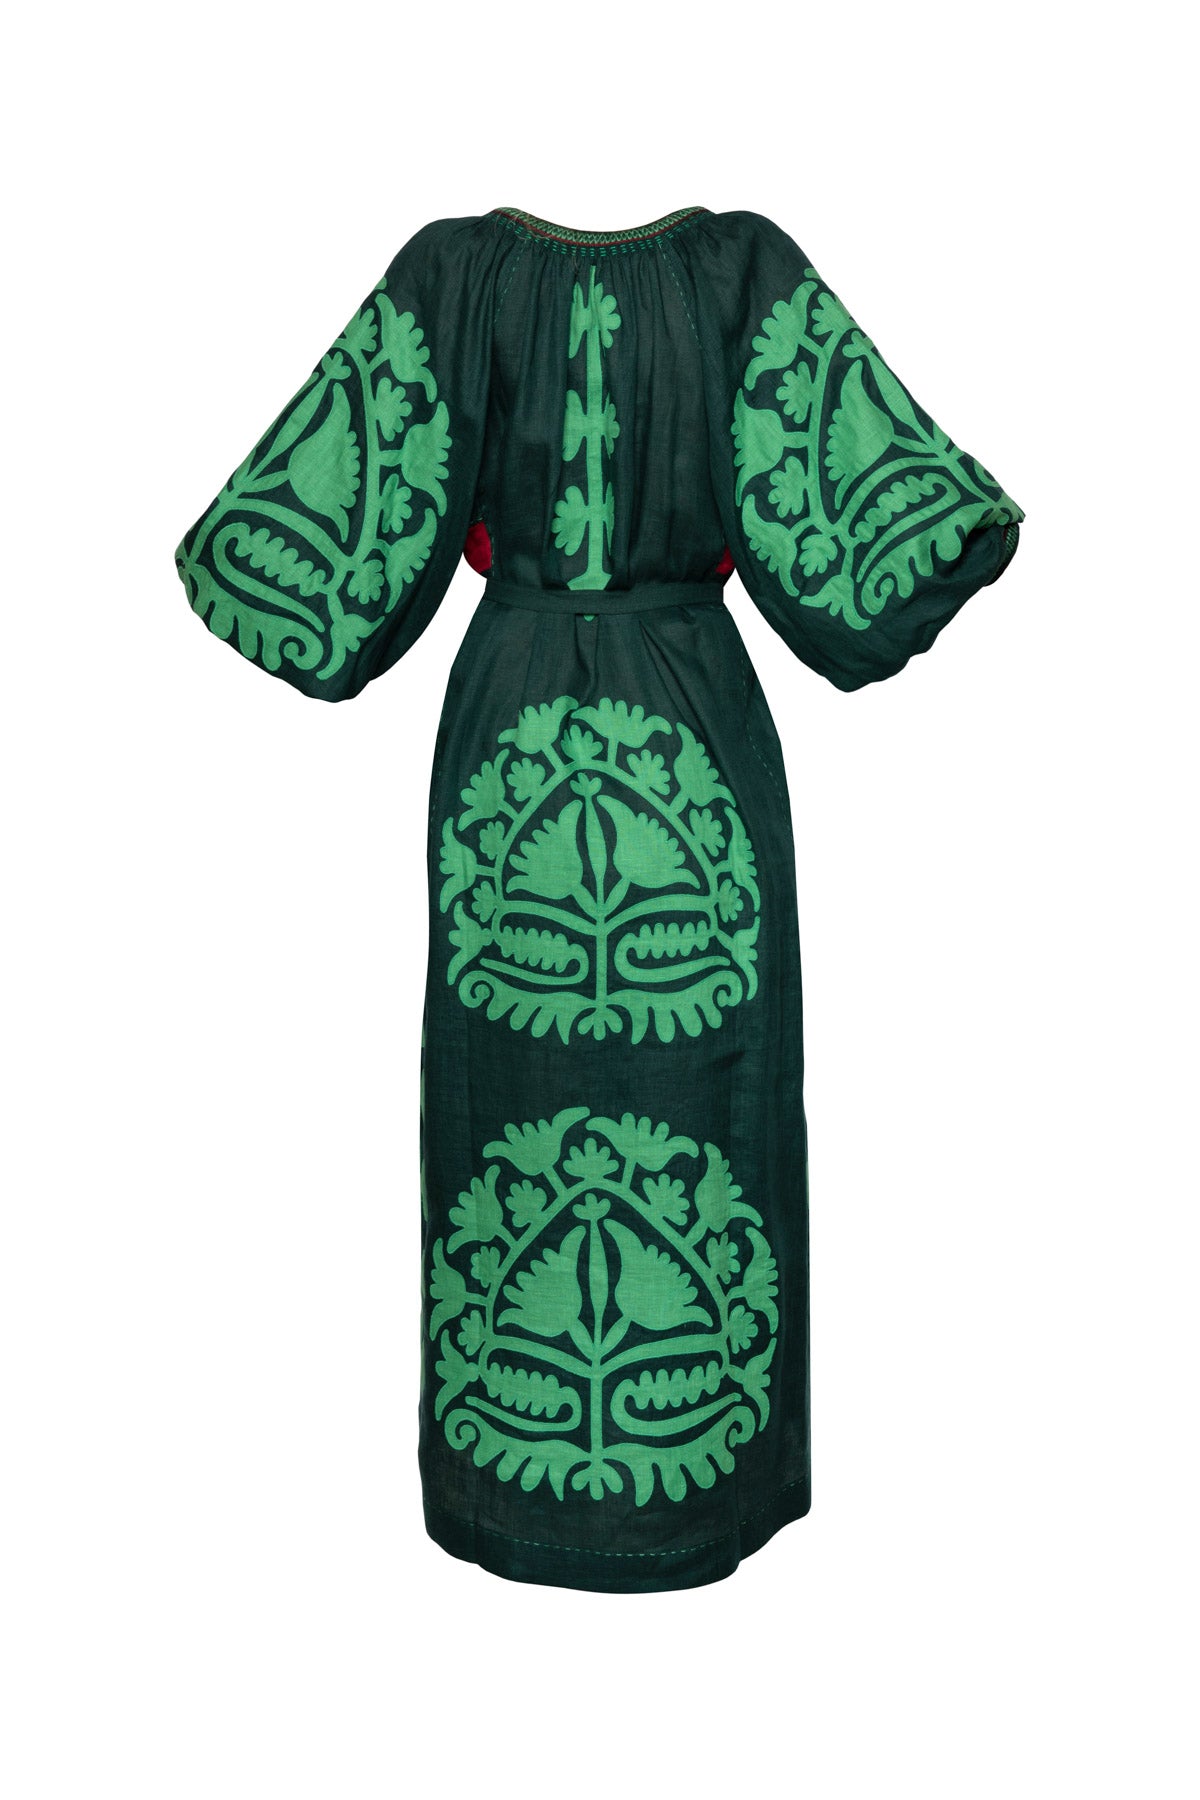 Shalimar Dress - Emerald & Neon Green